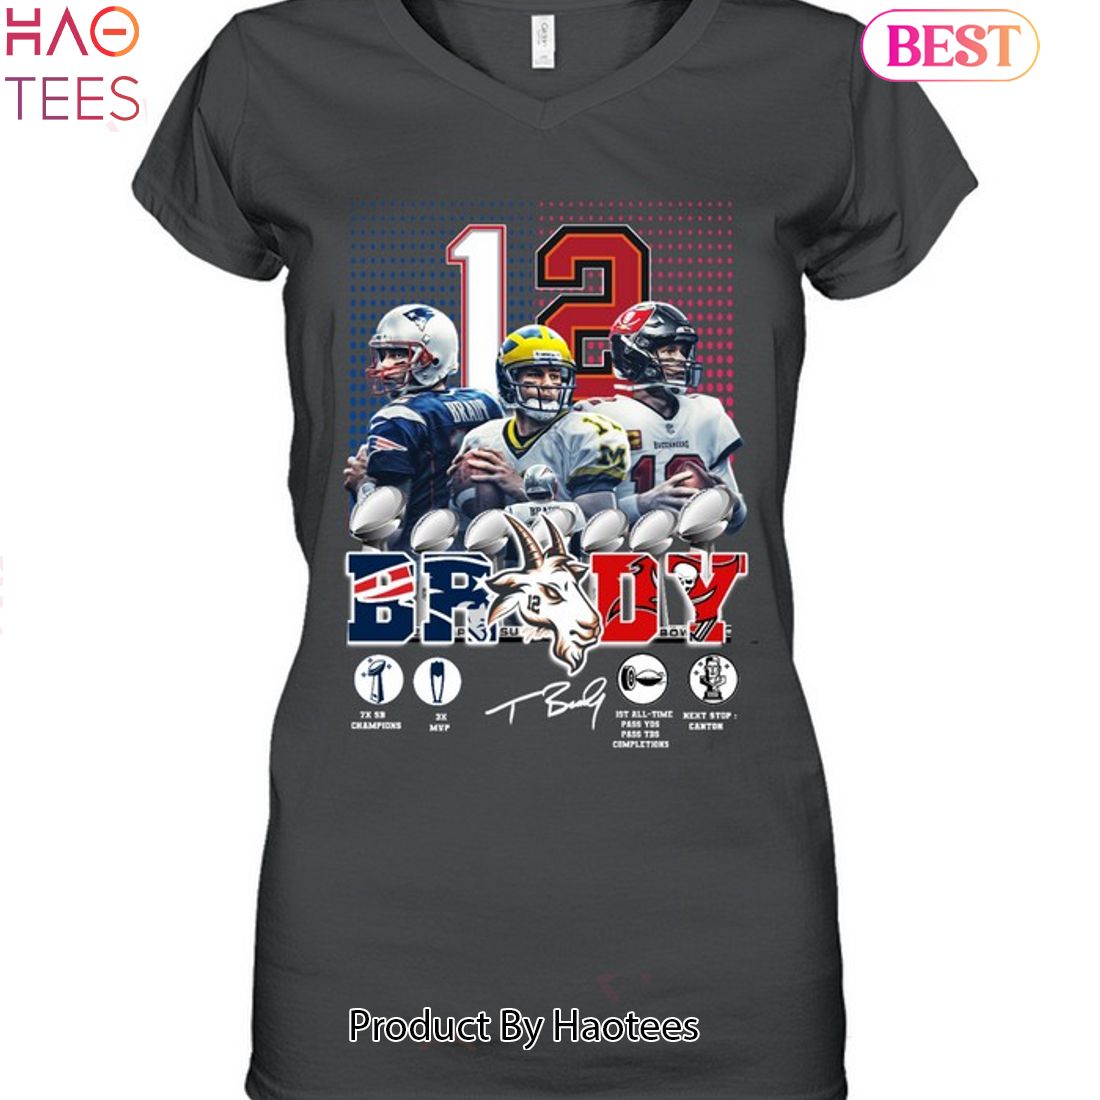 NEW SALE Tom Brady Unisex T-Shirt Limited Edition